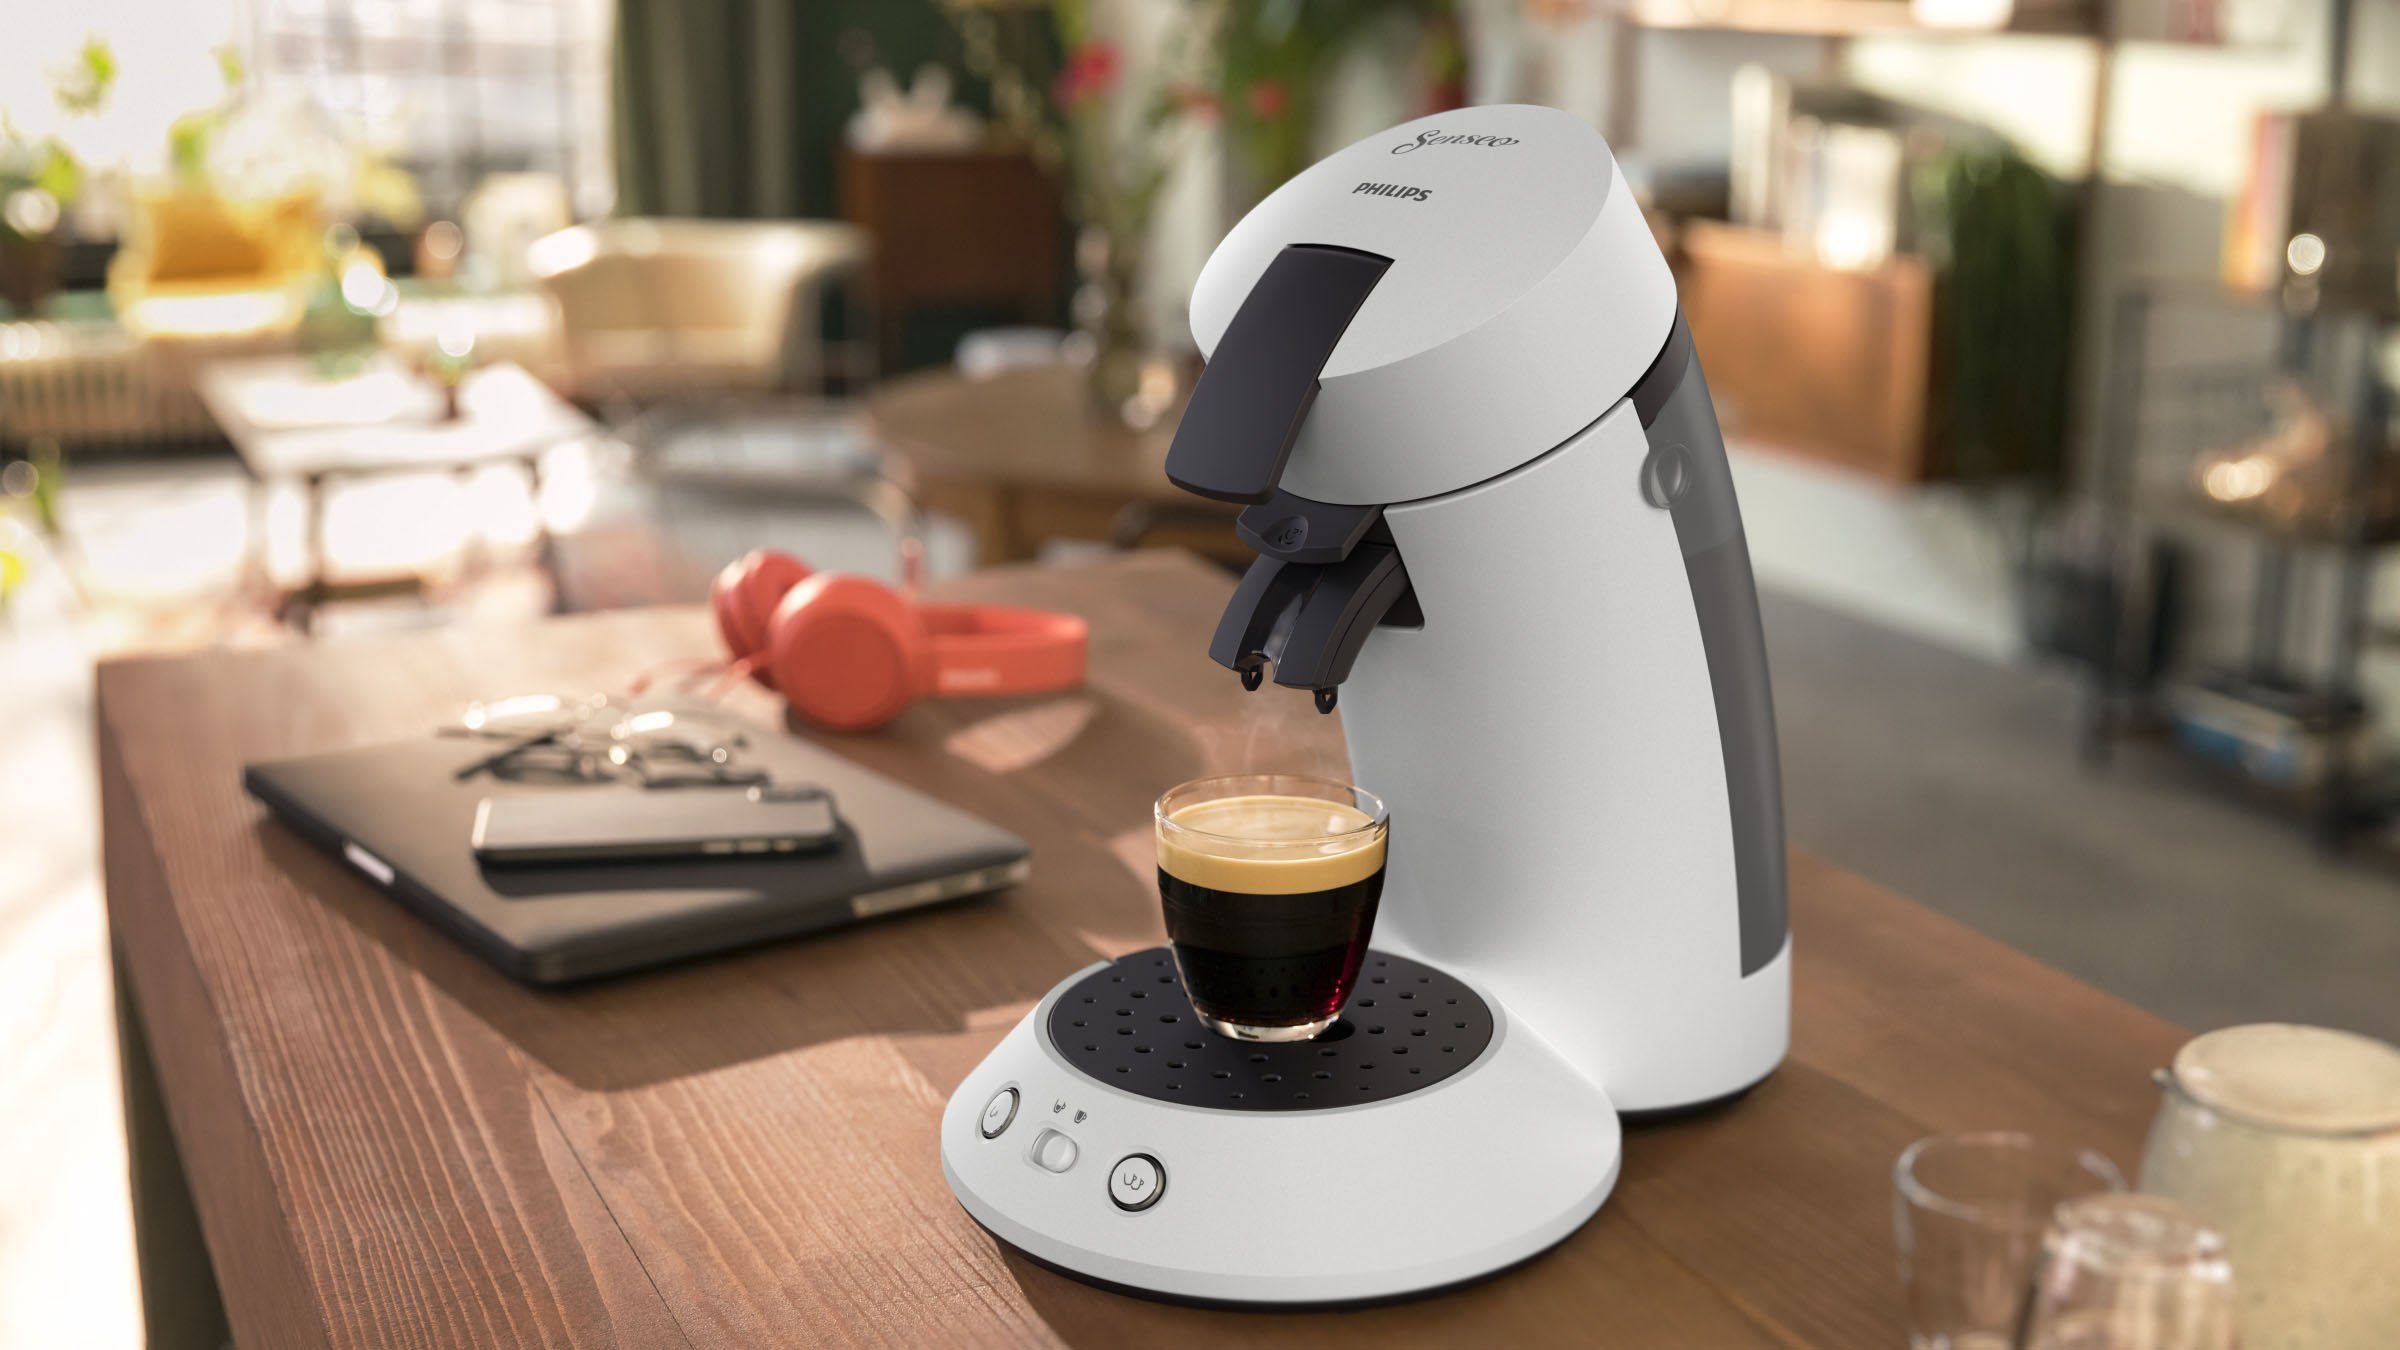 Philips Senseo Kaffeepadmaschine Original Plus aus +3 recyceltem €5,-UVP) Memo-Funktion, Plastik, CSA210/10, 80% Kaffeespezialitäten, Gratis-Zugaben (Wert